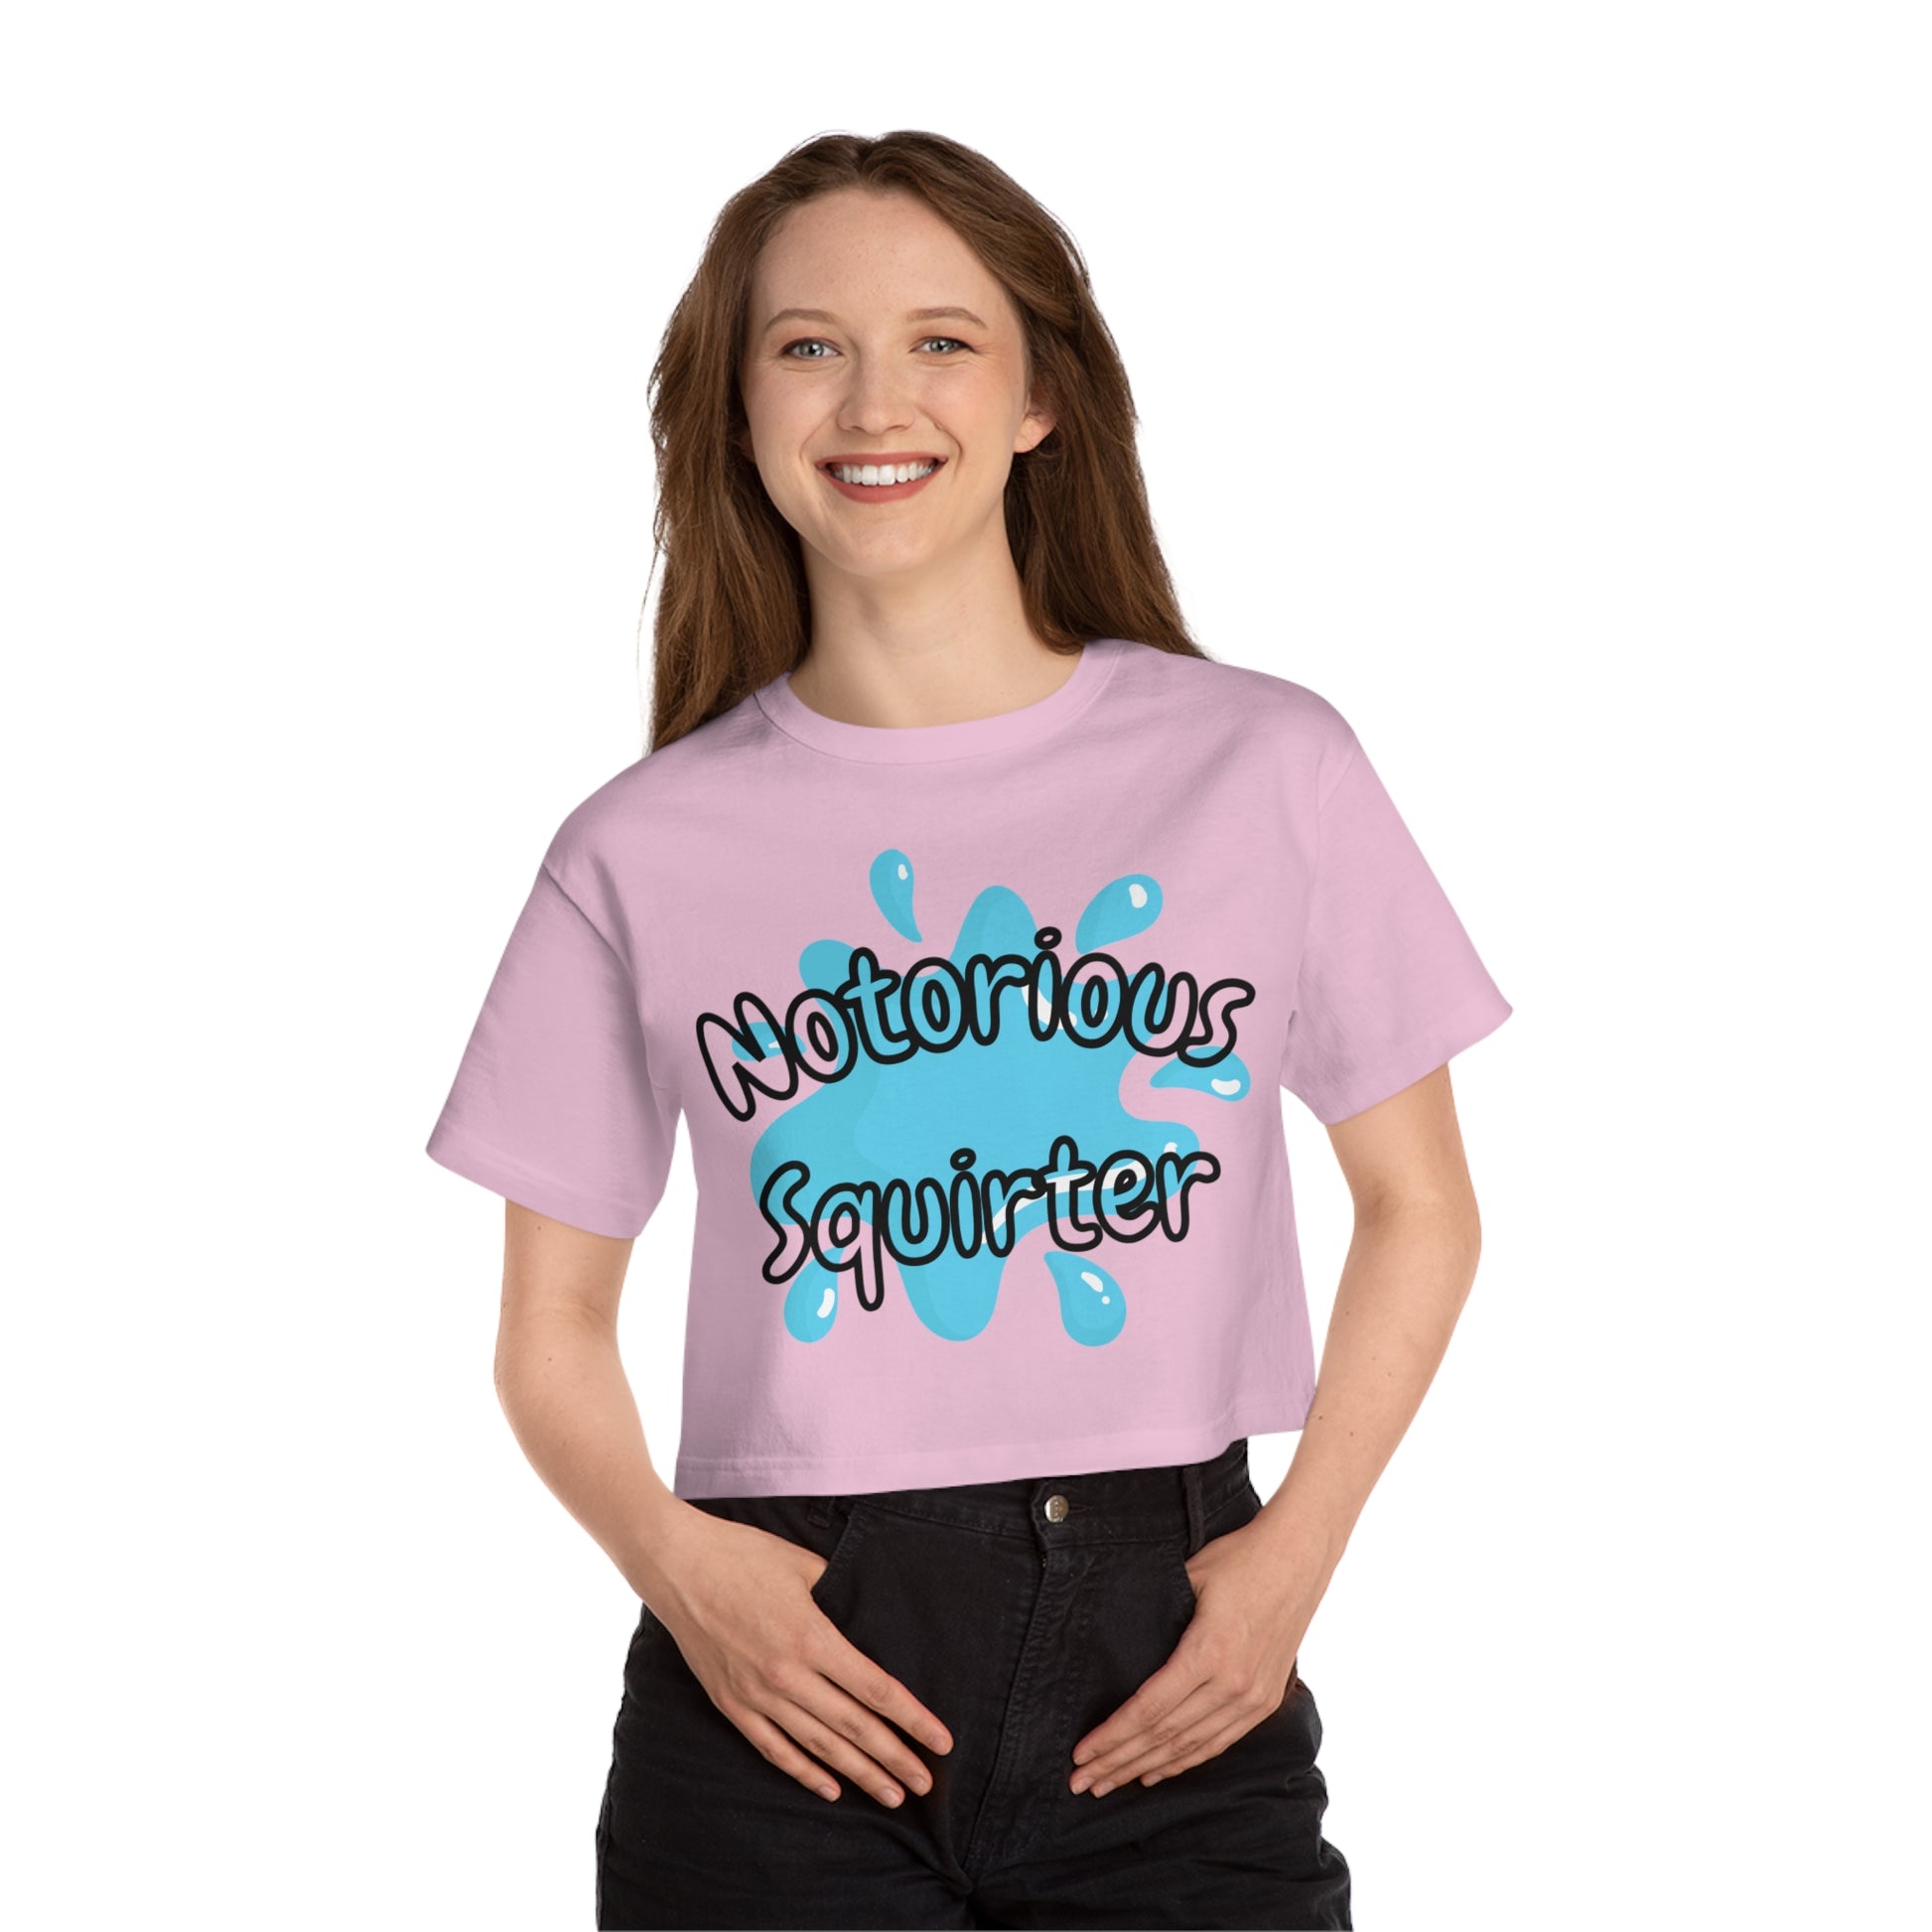 Stamina for Men Women's Notorious Squirter Cropped T-Shirt - Stamina for Men®